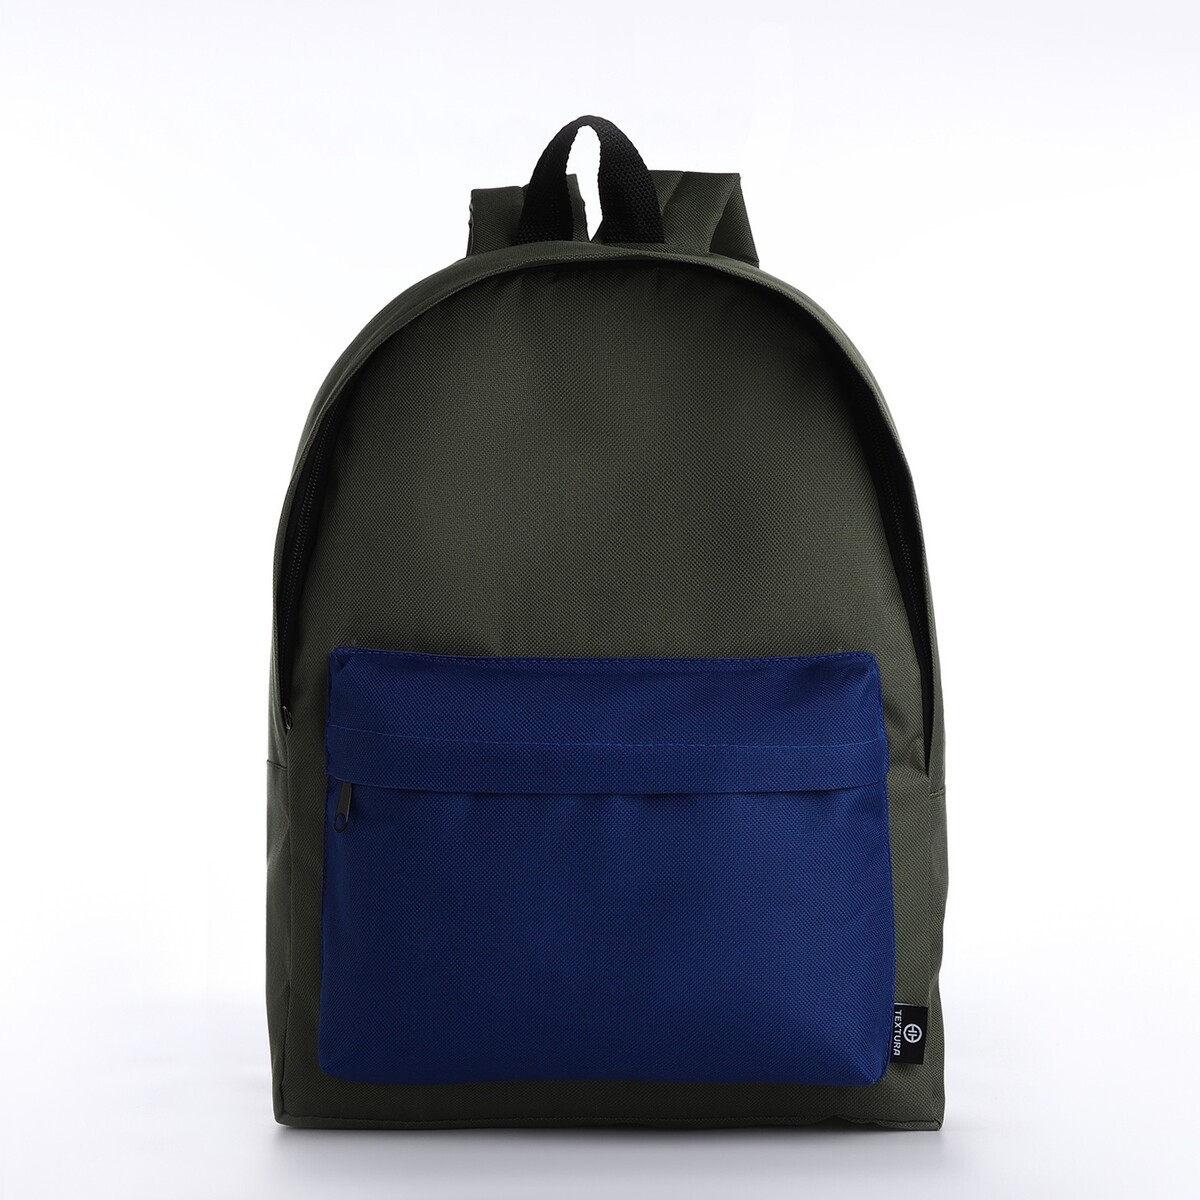 Спортивный рюкзак из текстиля на молнии, textura, 20 литров, цвет хаки/синий